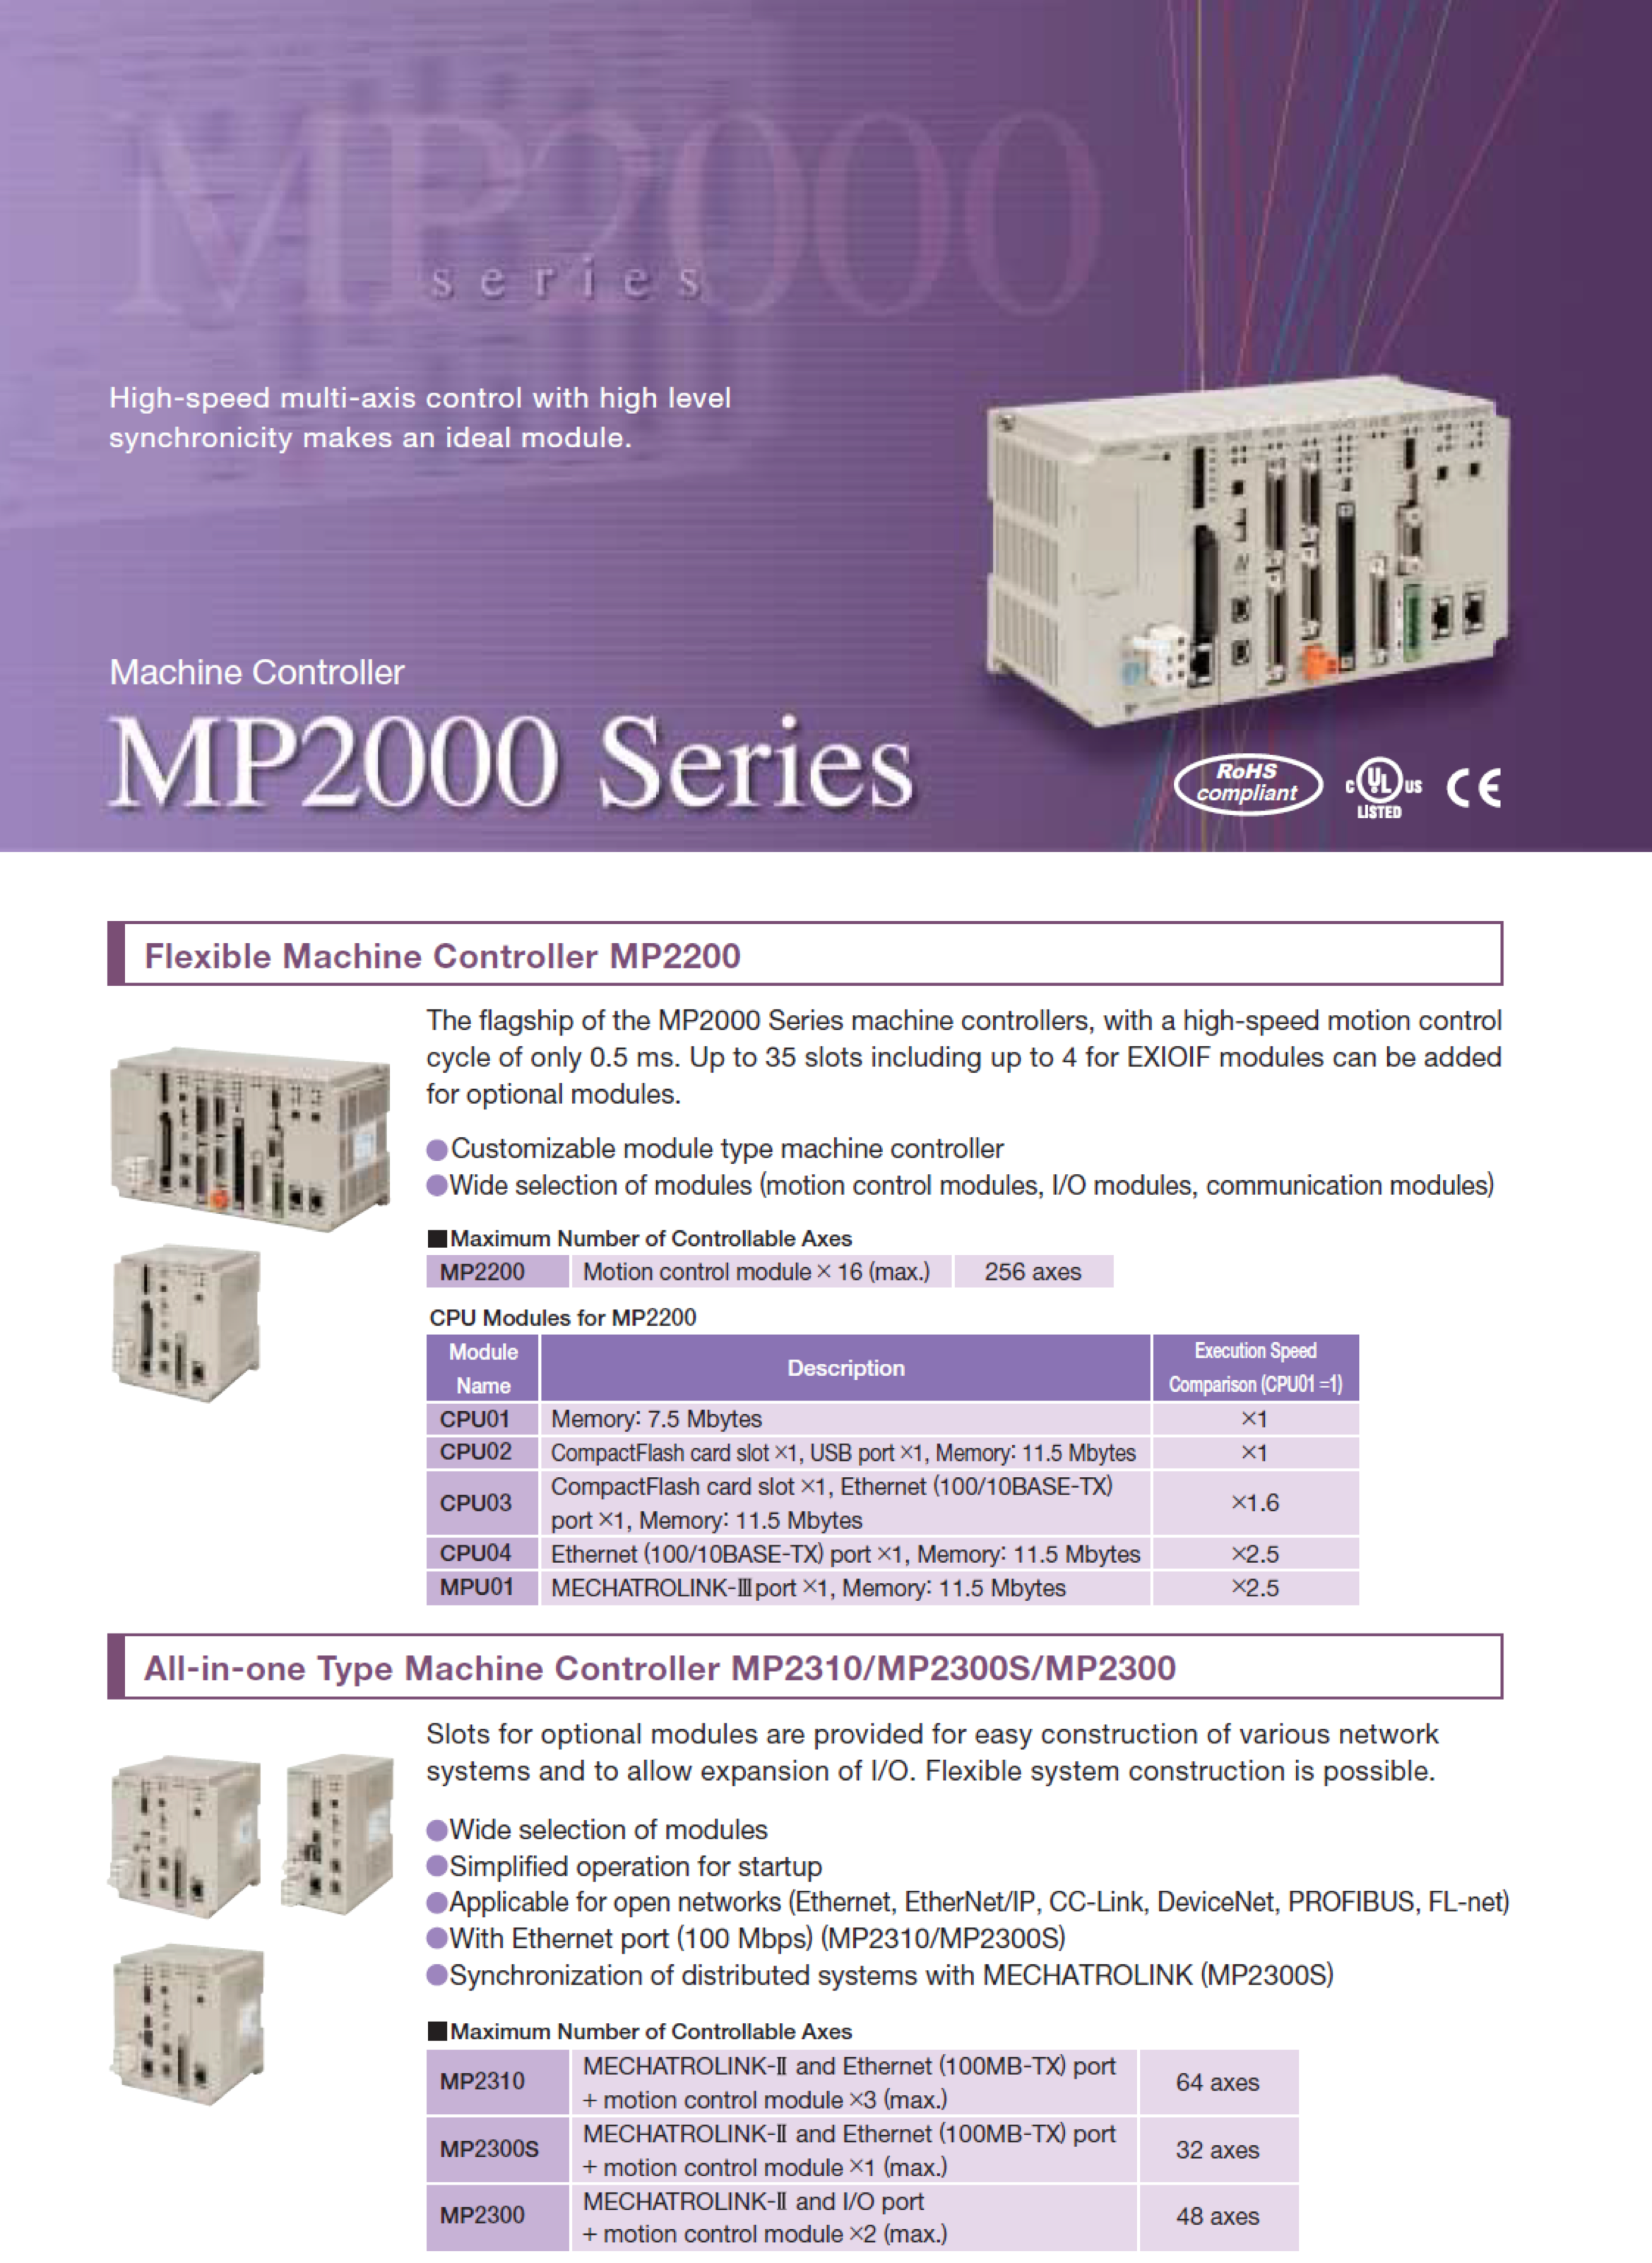 Machine Controller MP2000 Series